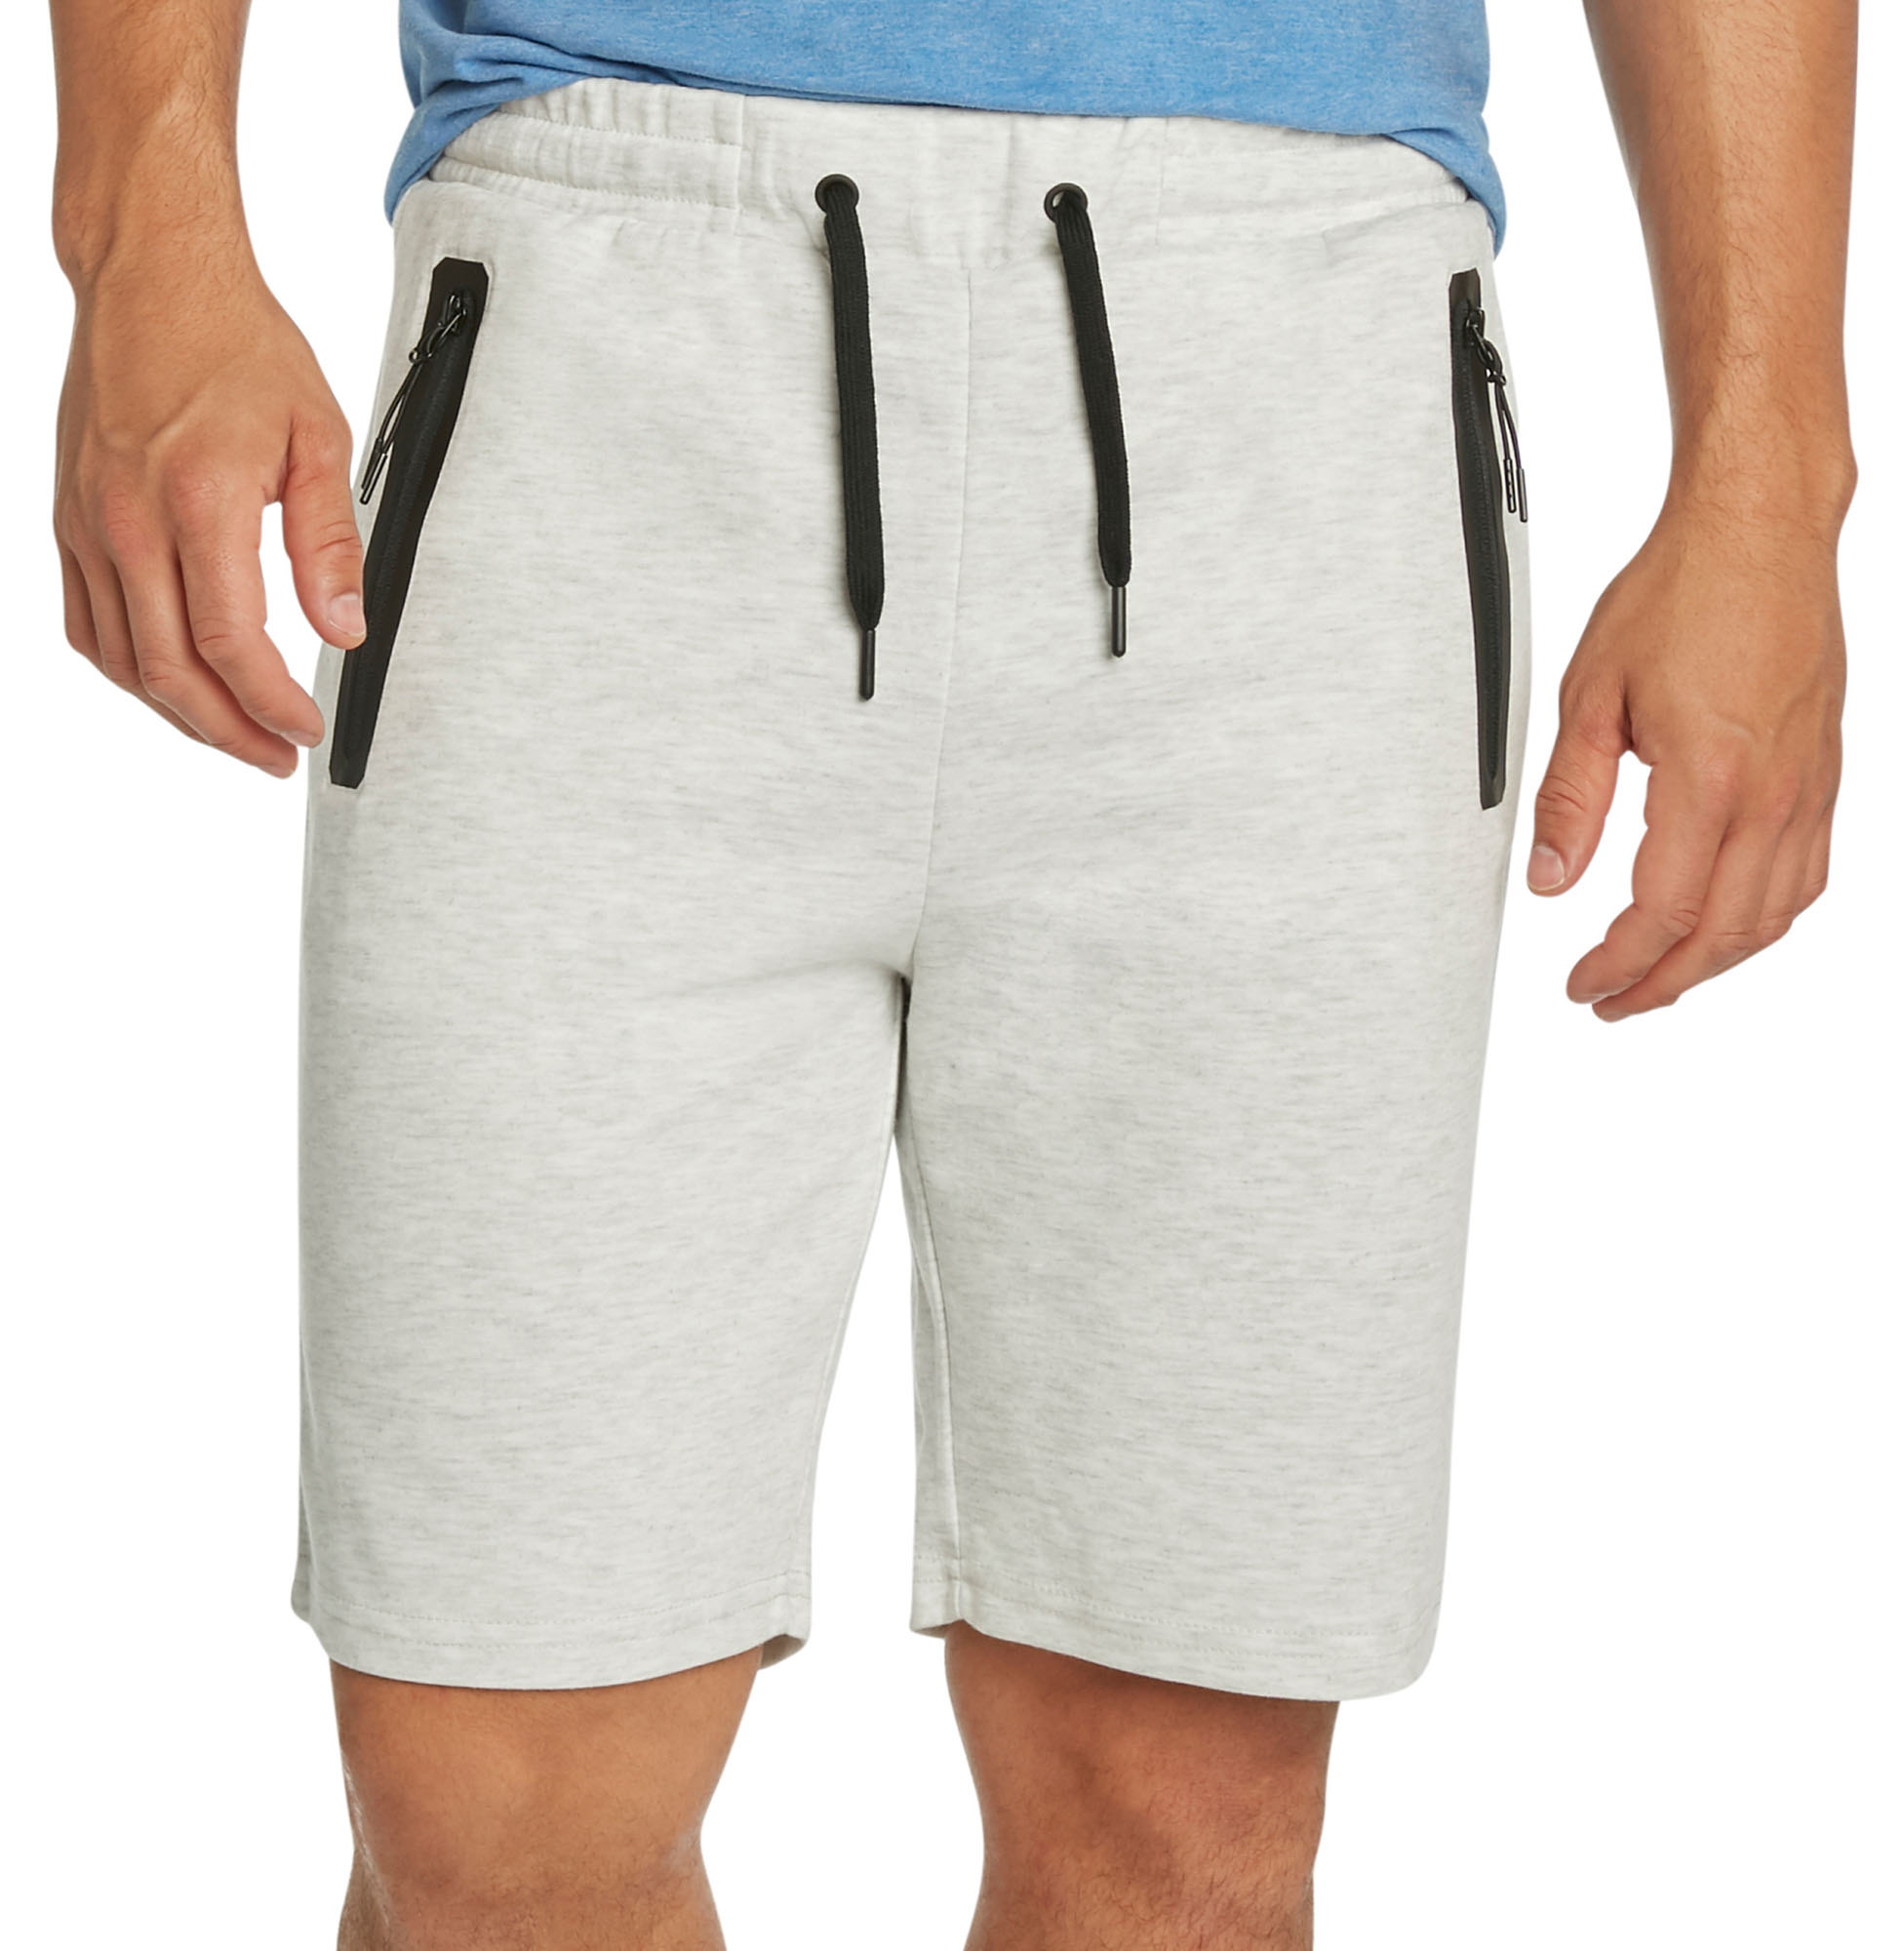 men's sport shorts with zip pockets